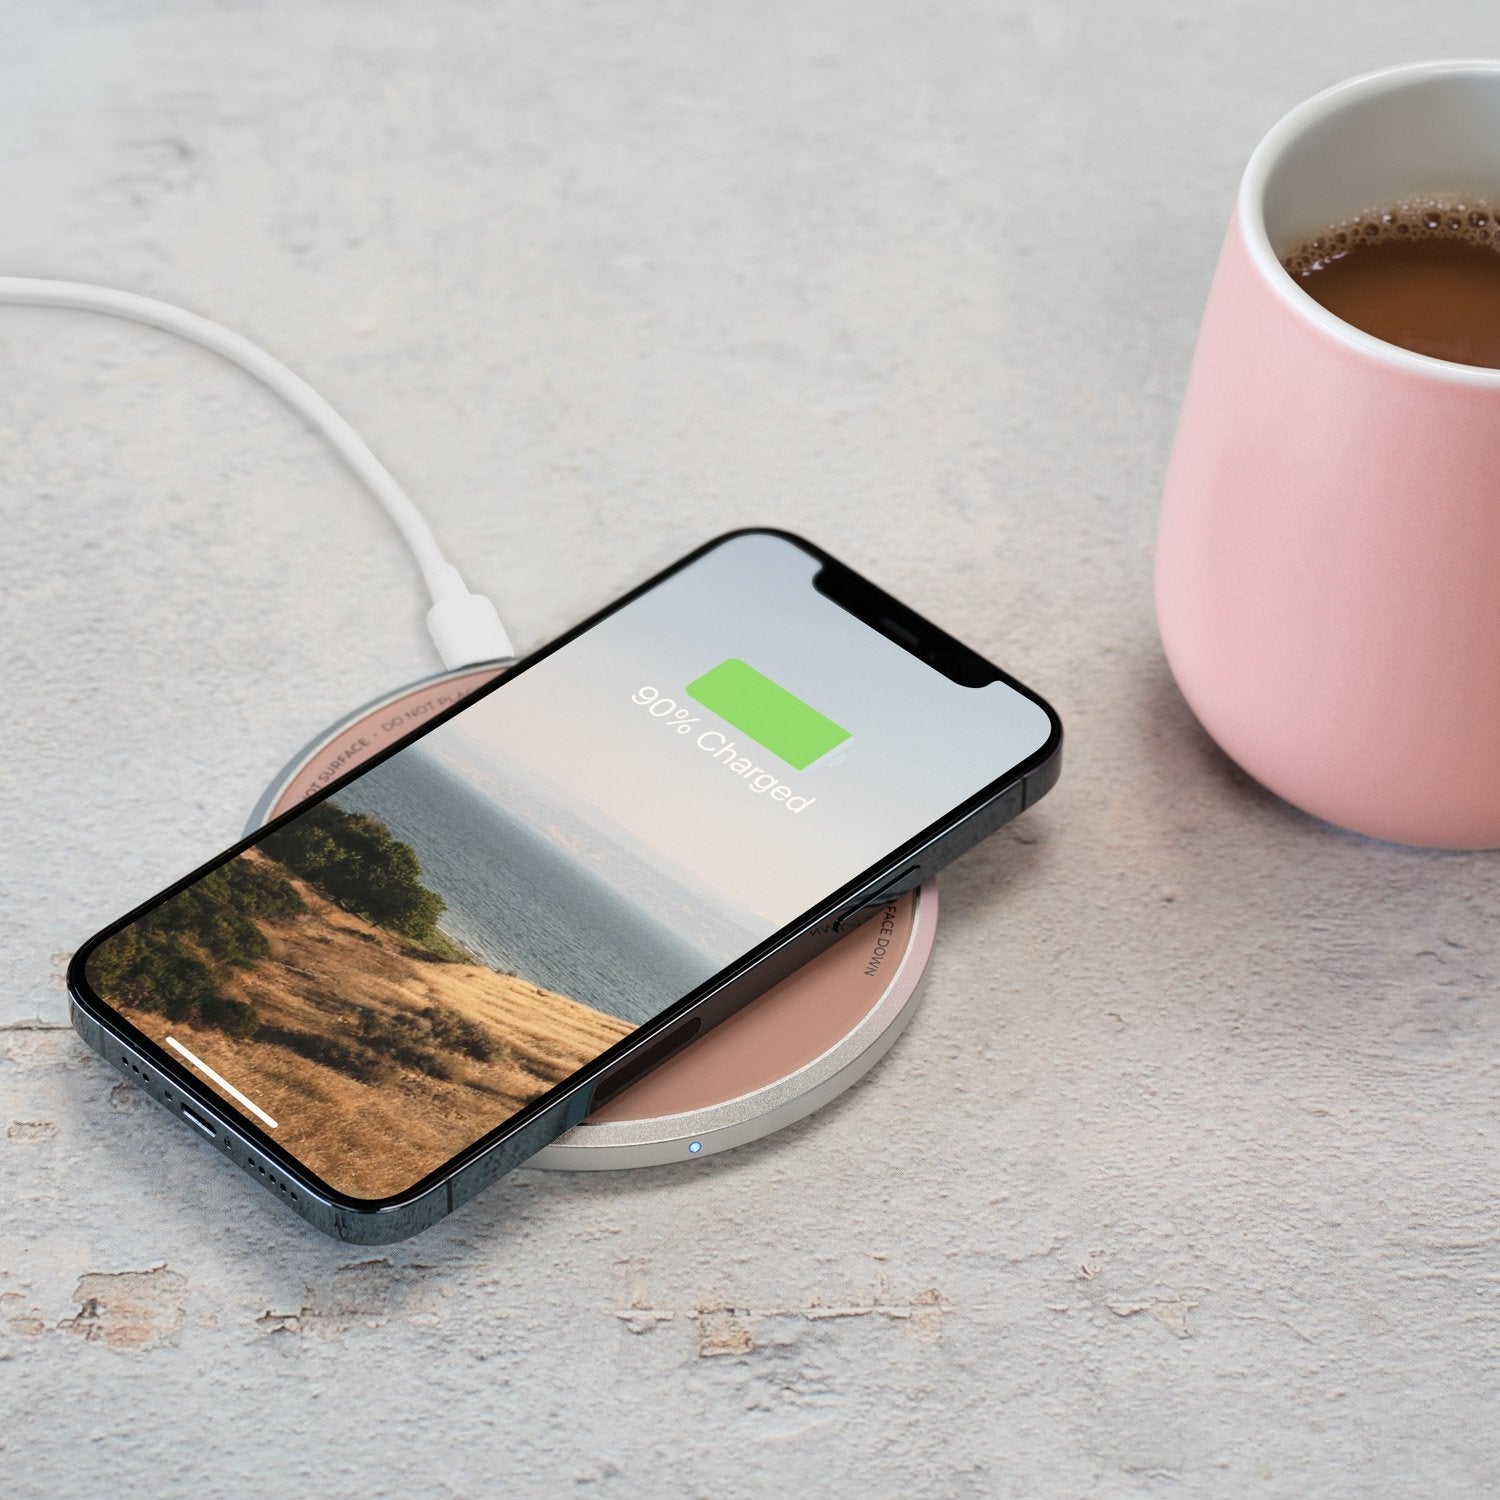 Pink mug with coffee next to phone on charging pad